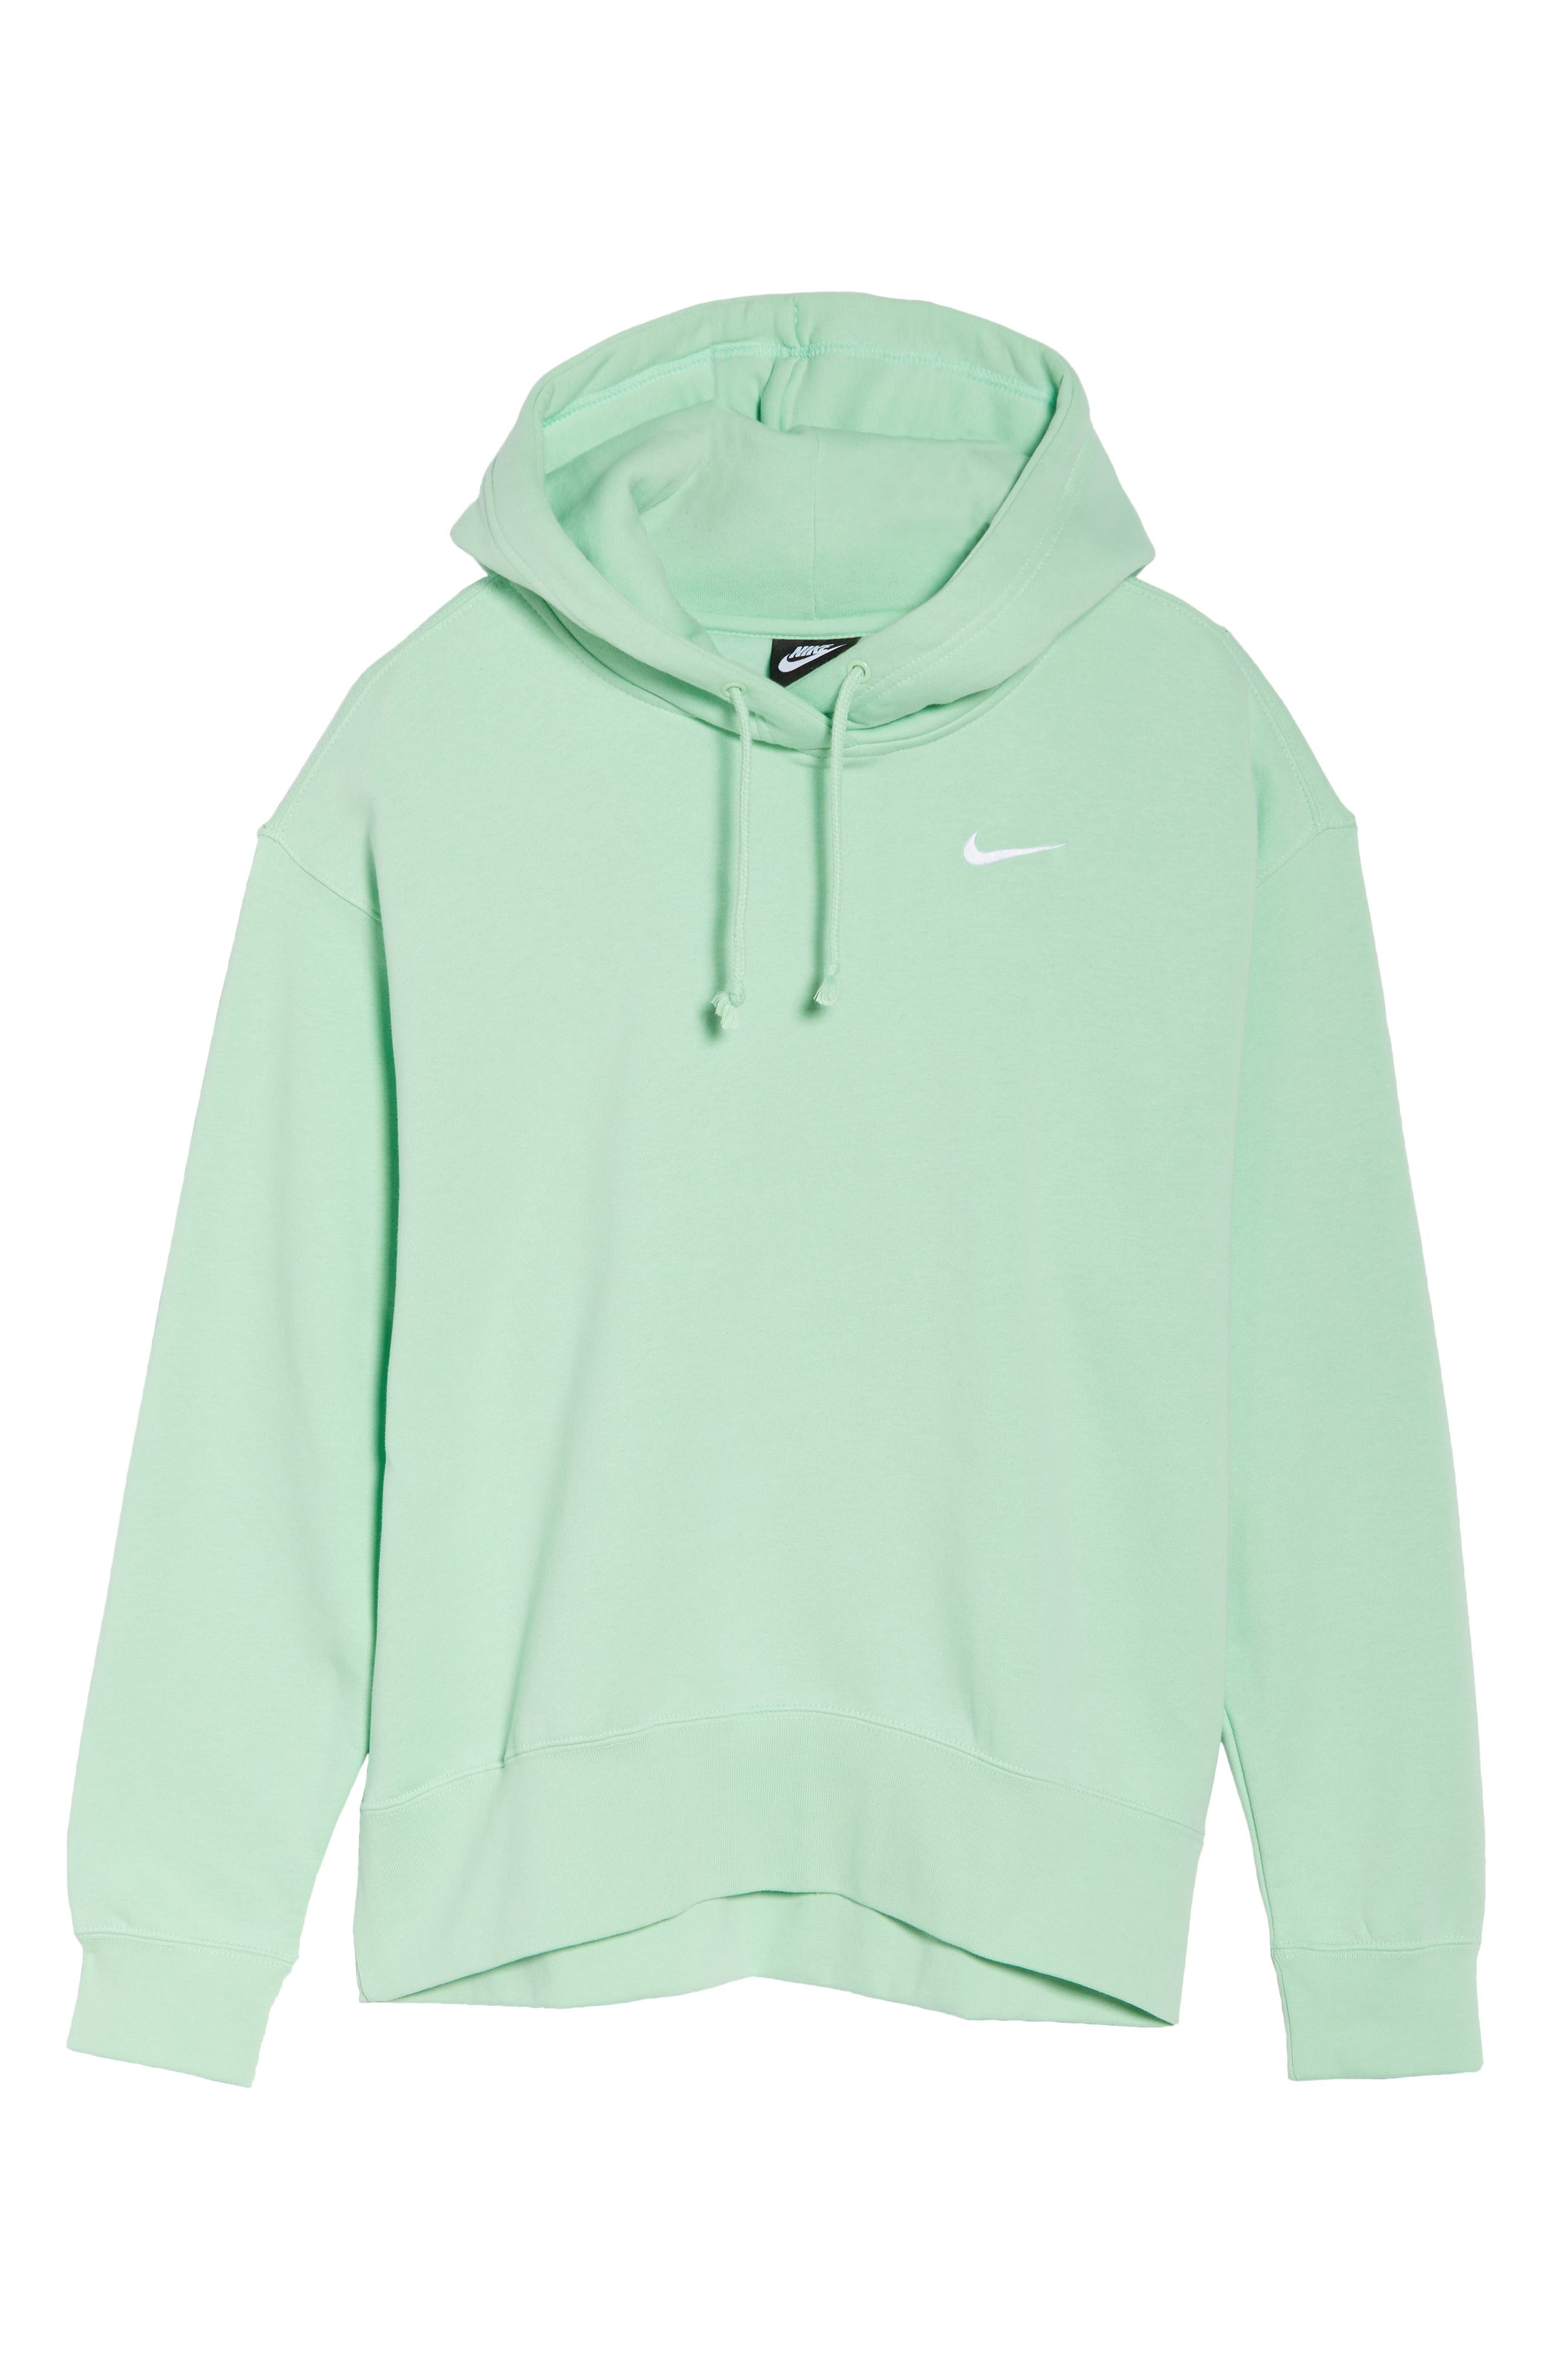 hoodies nike green